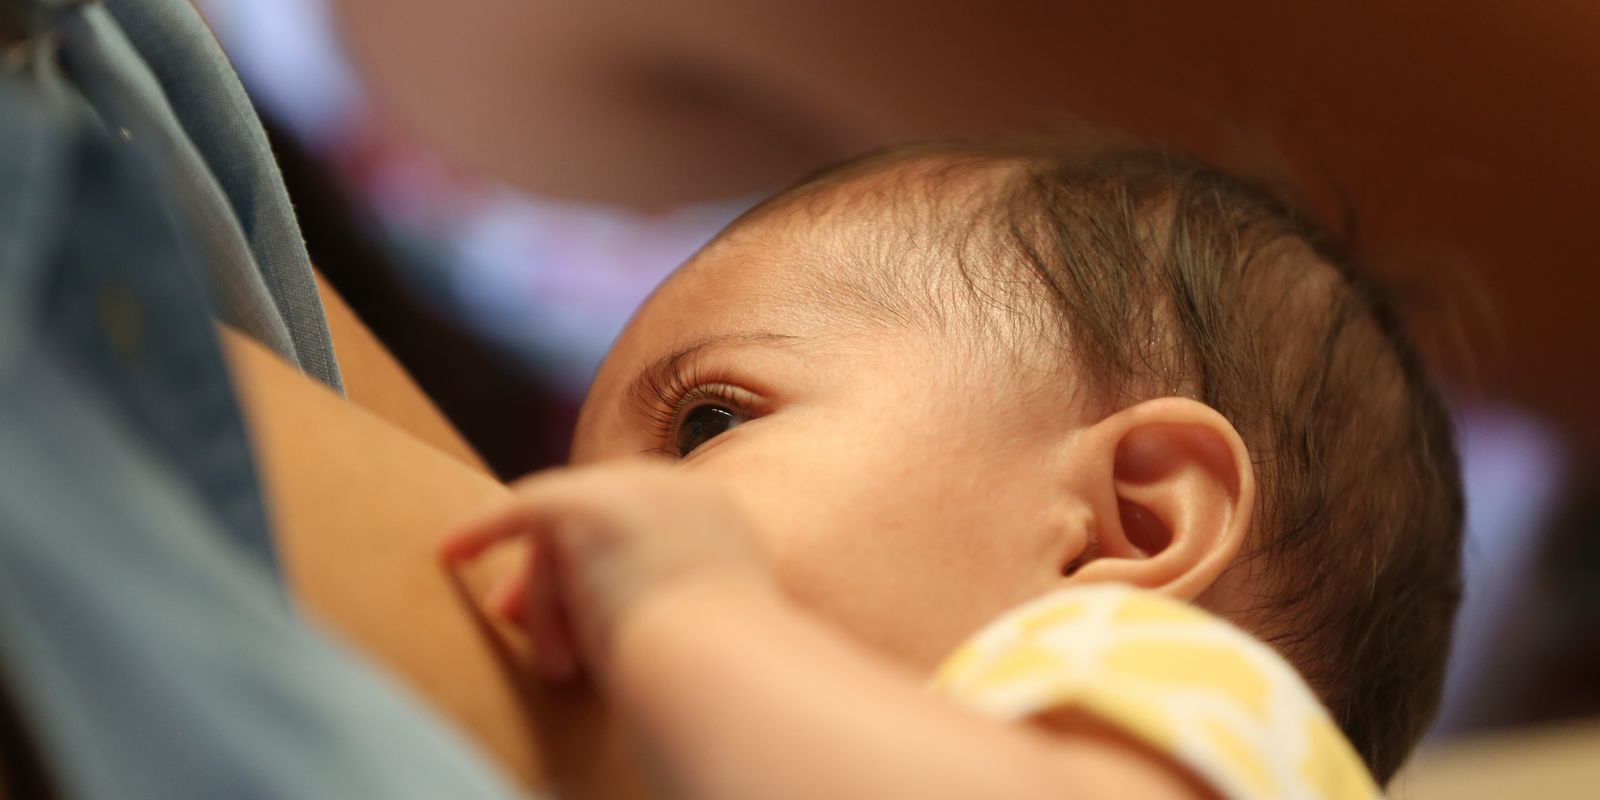 World Milk Donation Day highlights the value of breastfeeding